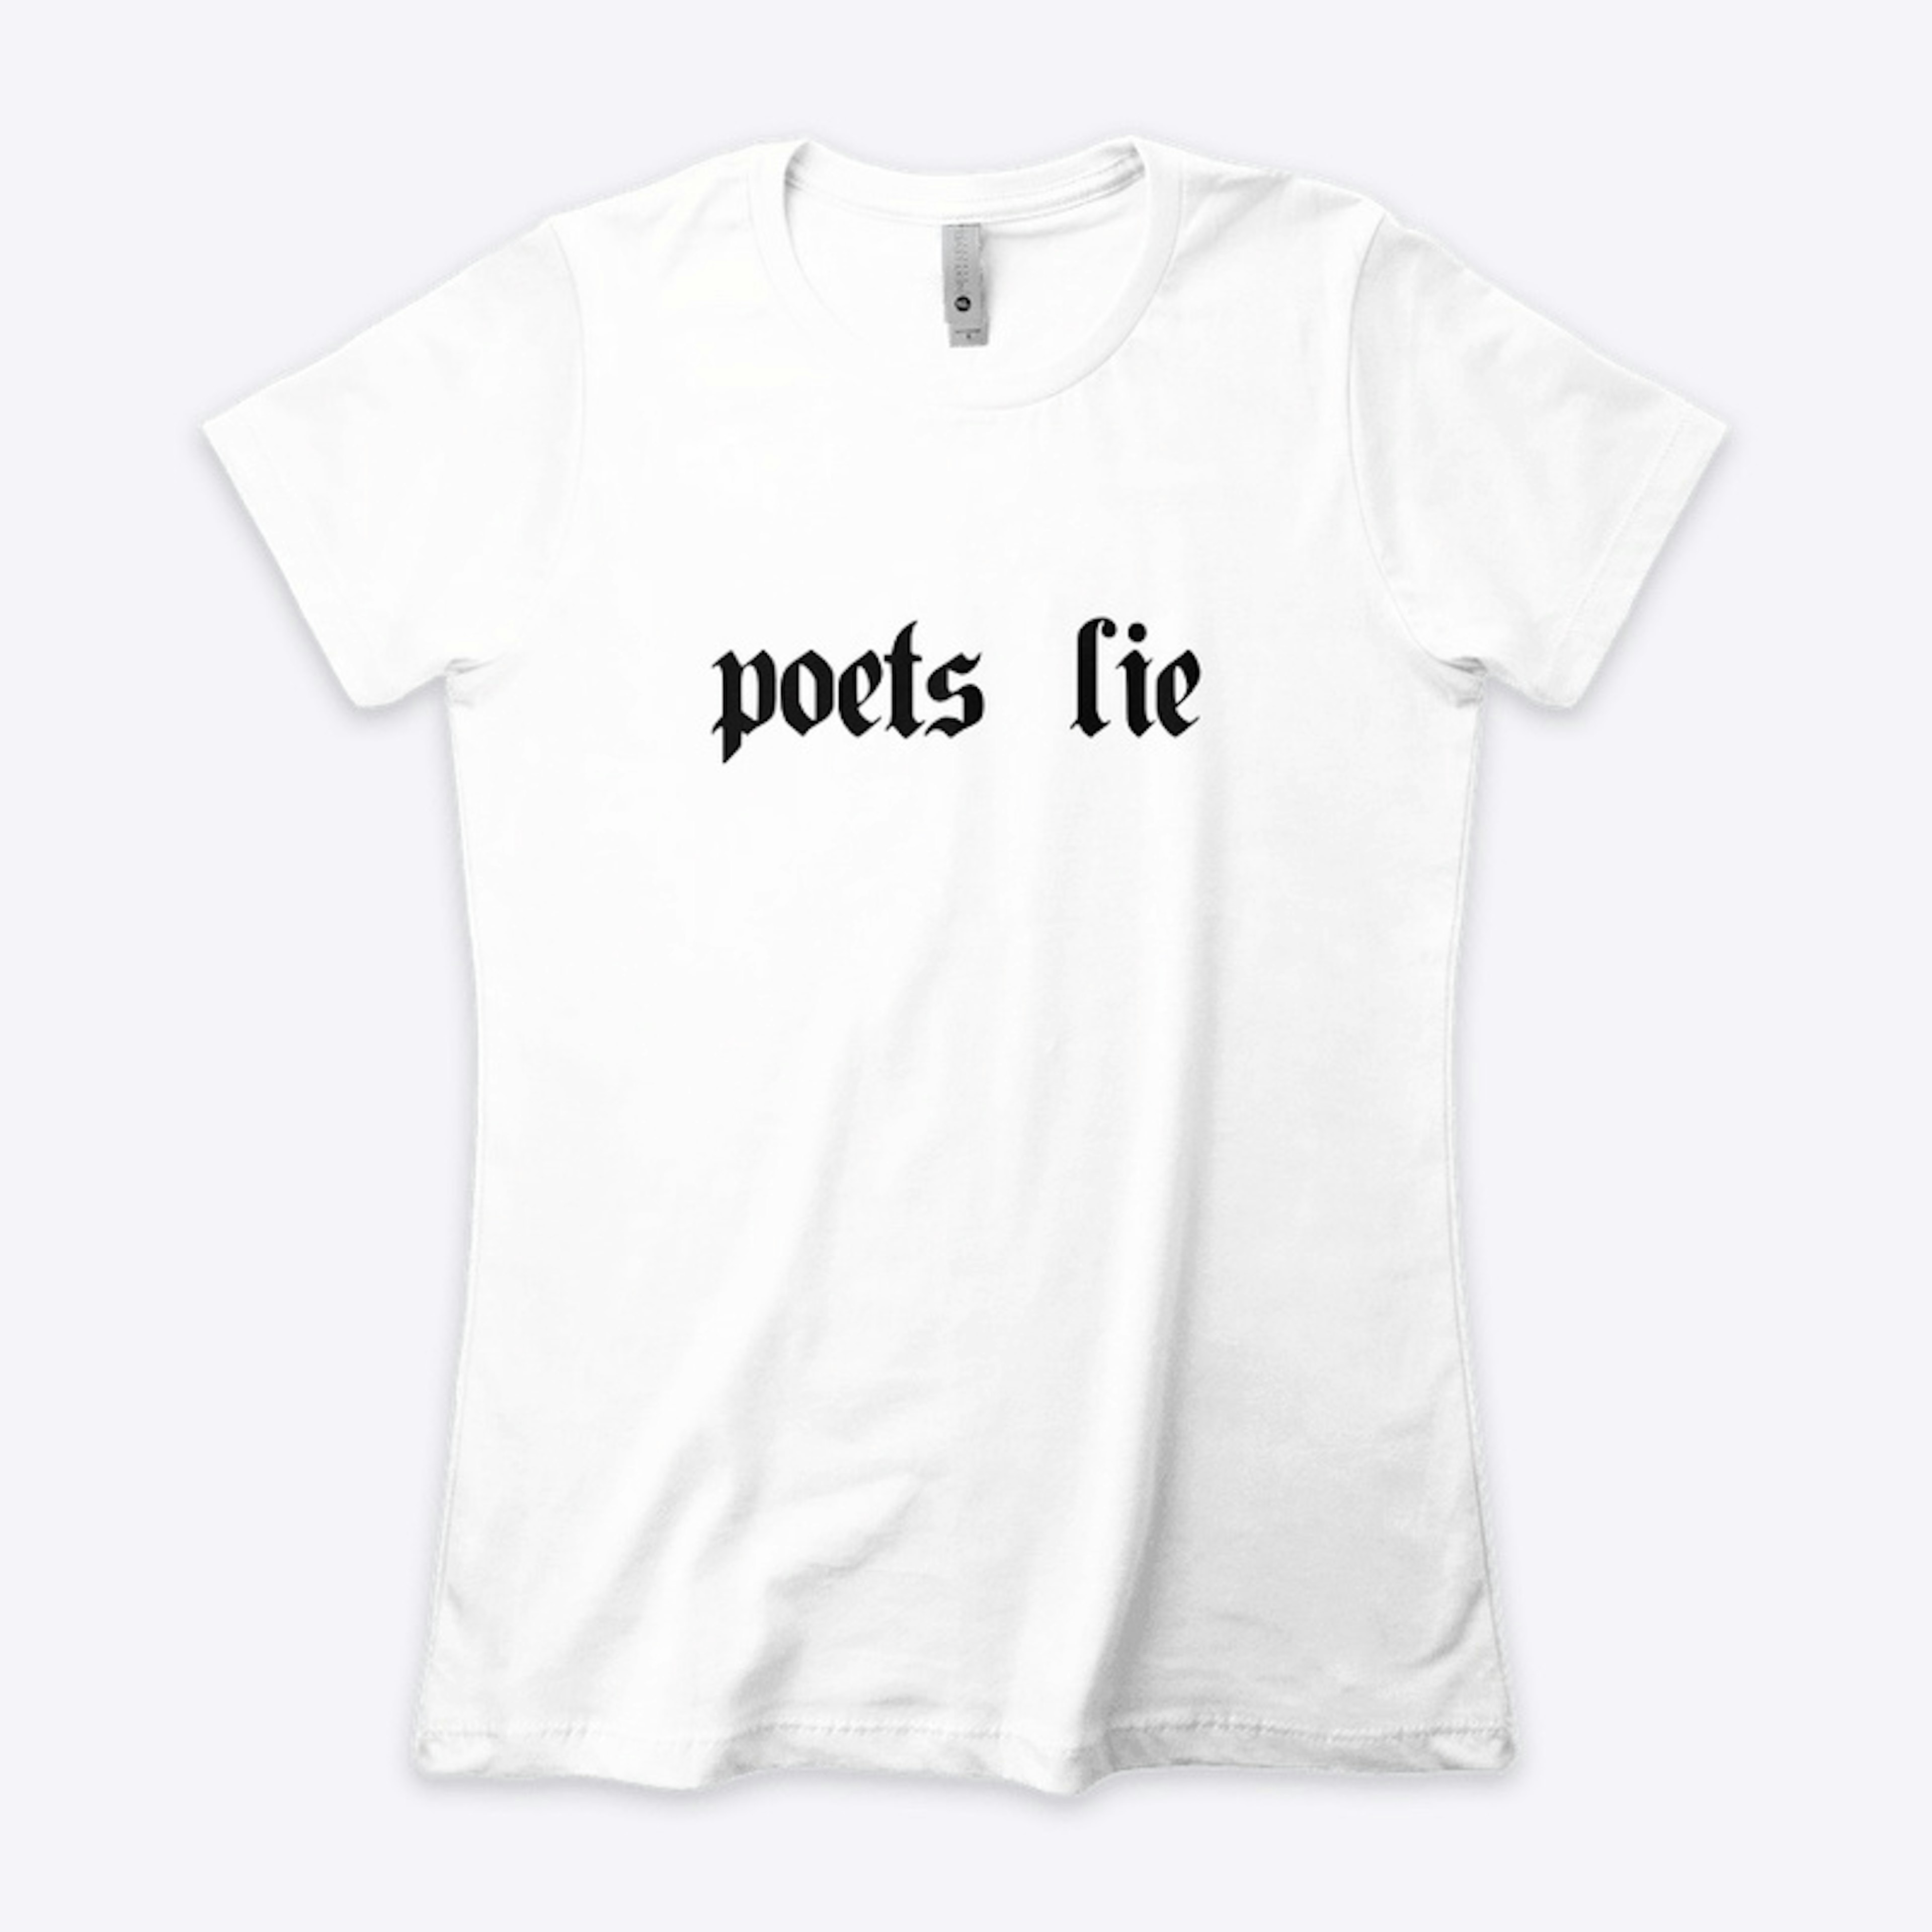 Poets Lie Tee in White